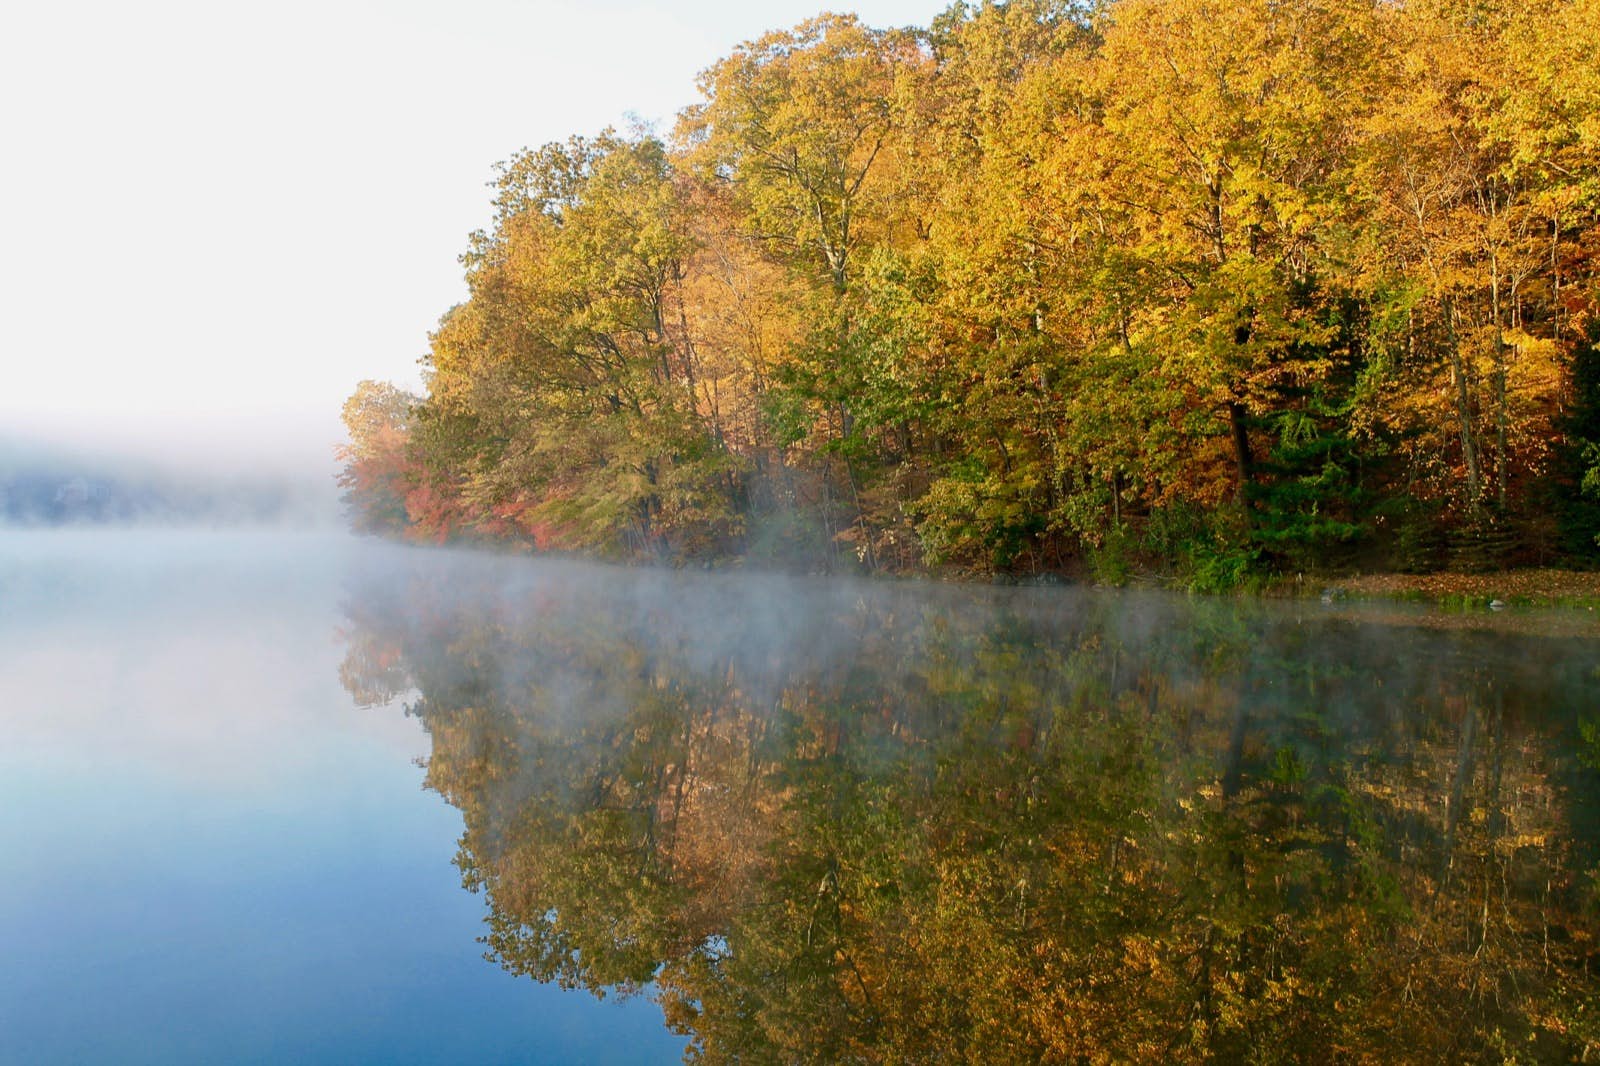 Trees with fall foliage border a lake with fog